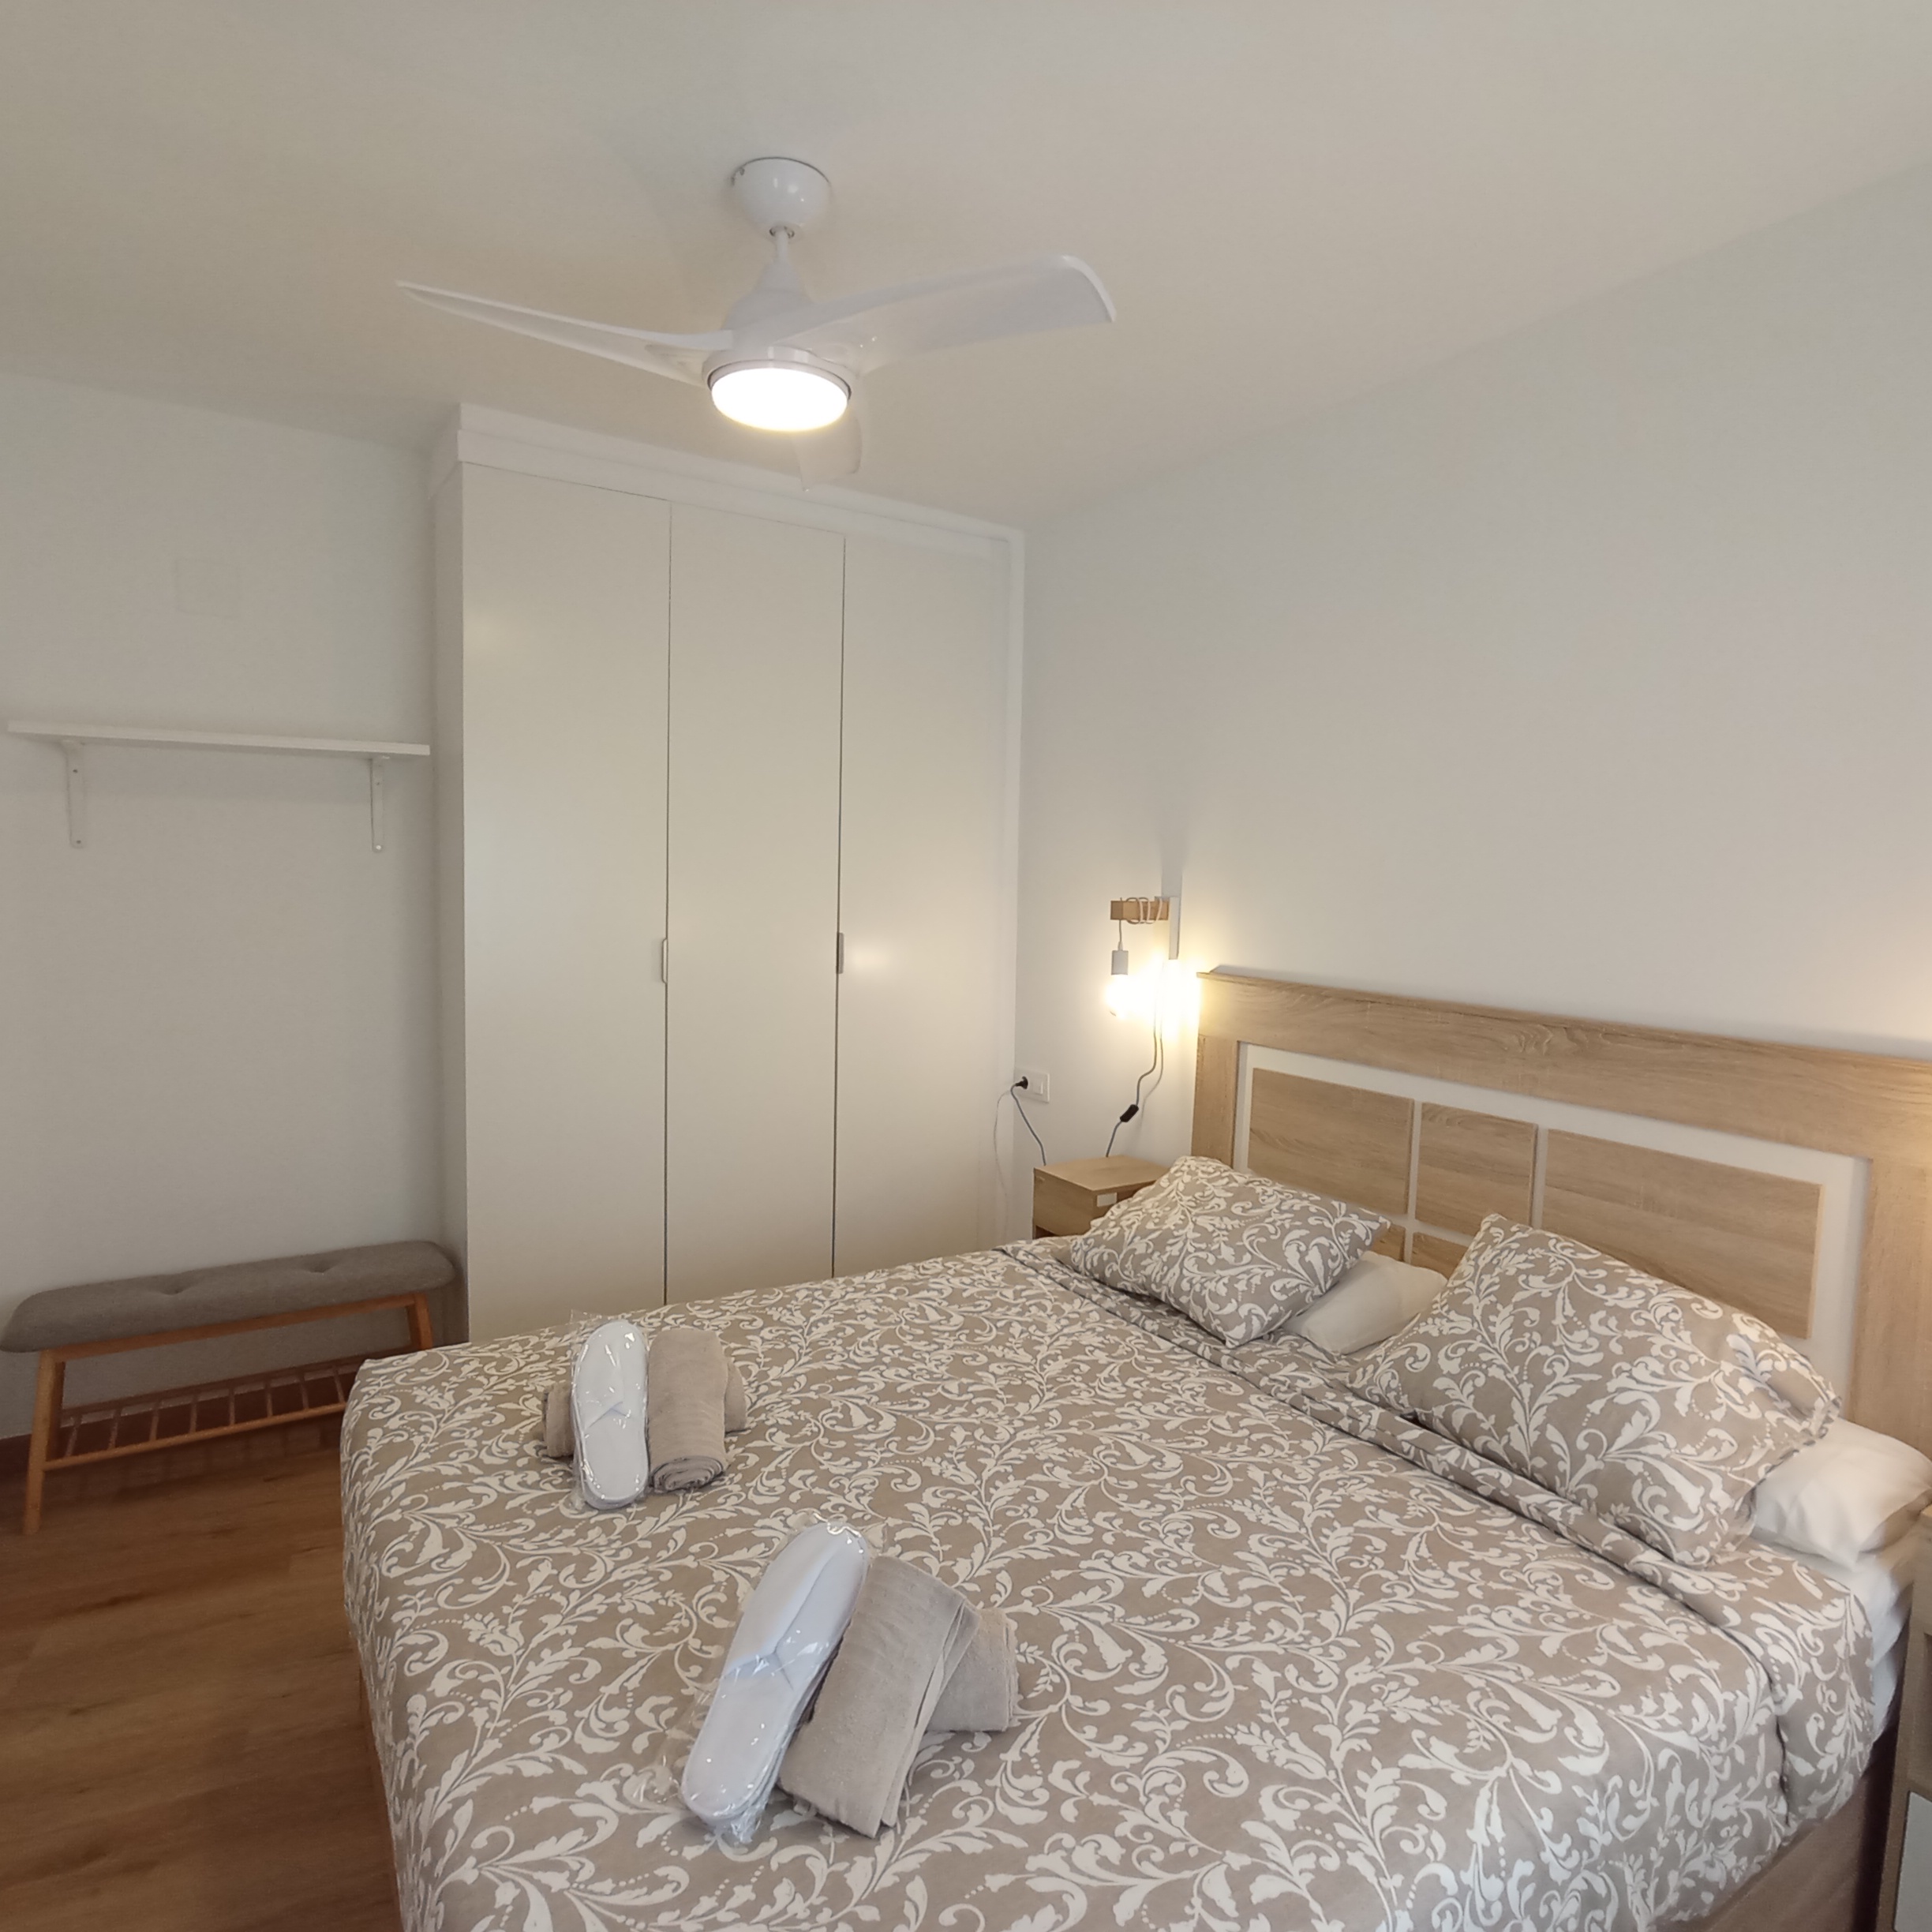 Trafalgar - 3 Bedroom apartment for rent in Valencia double bedroom 2